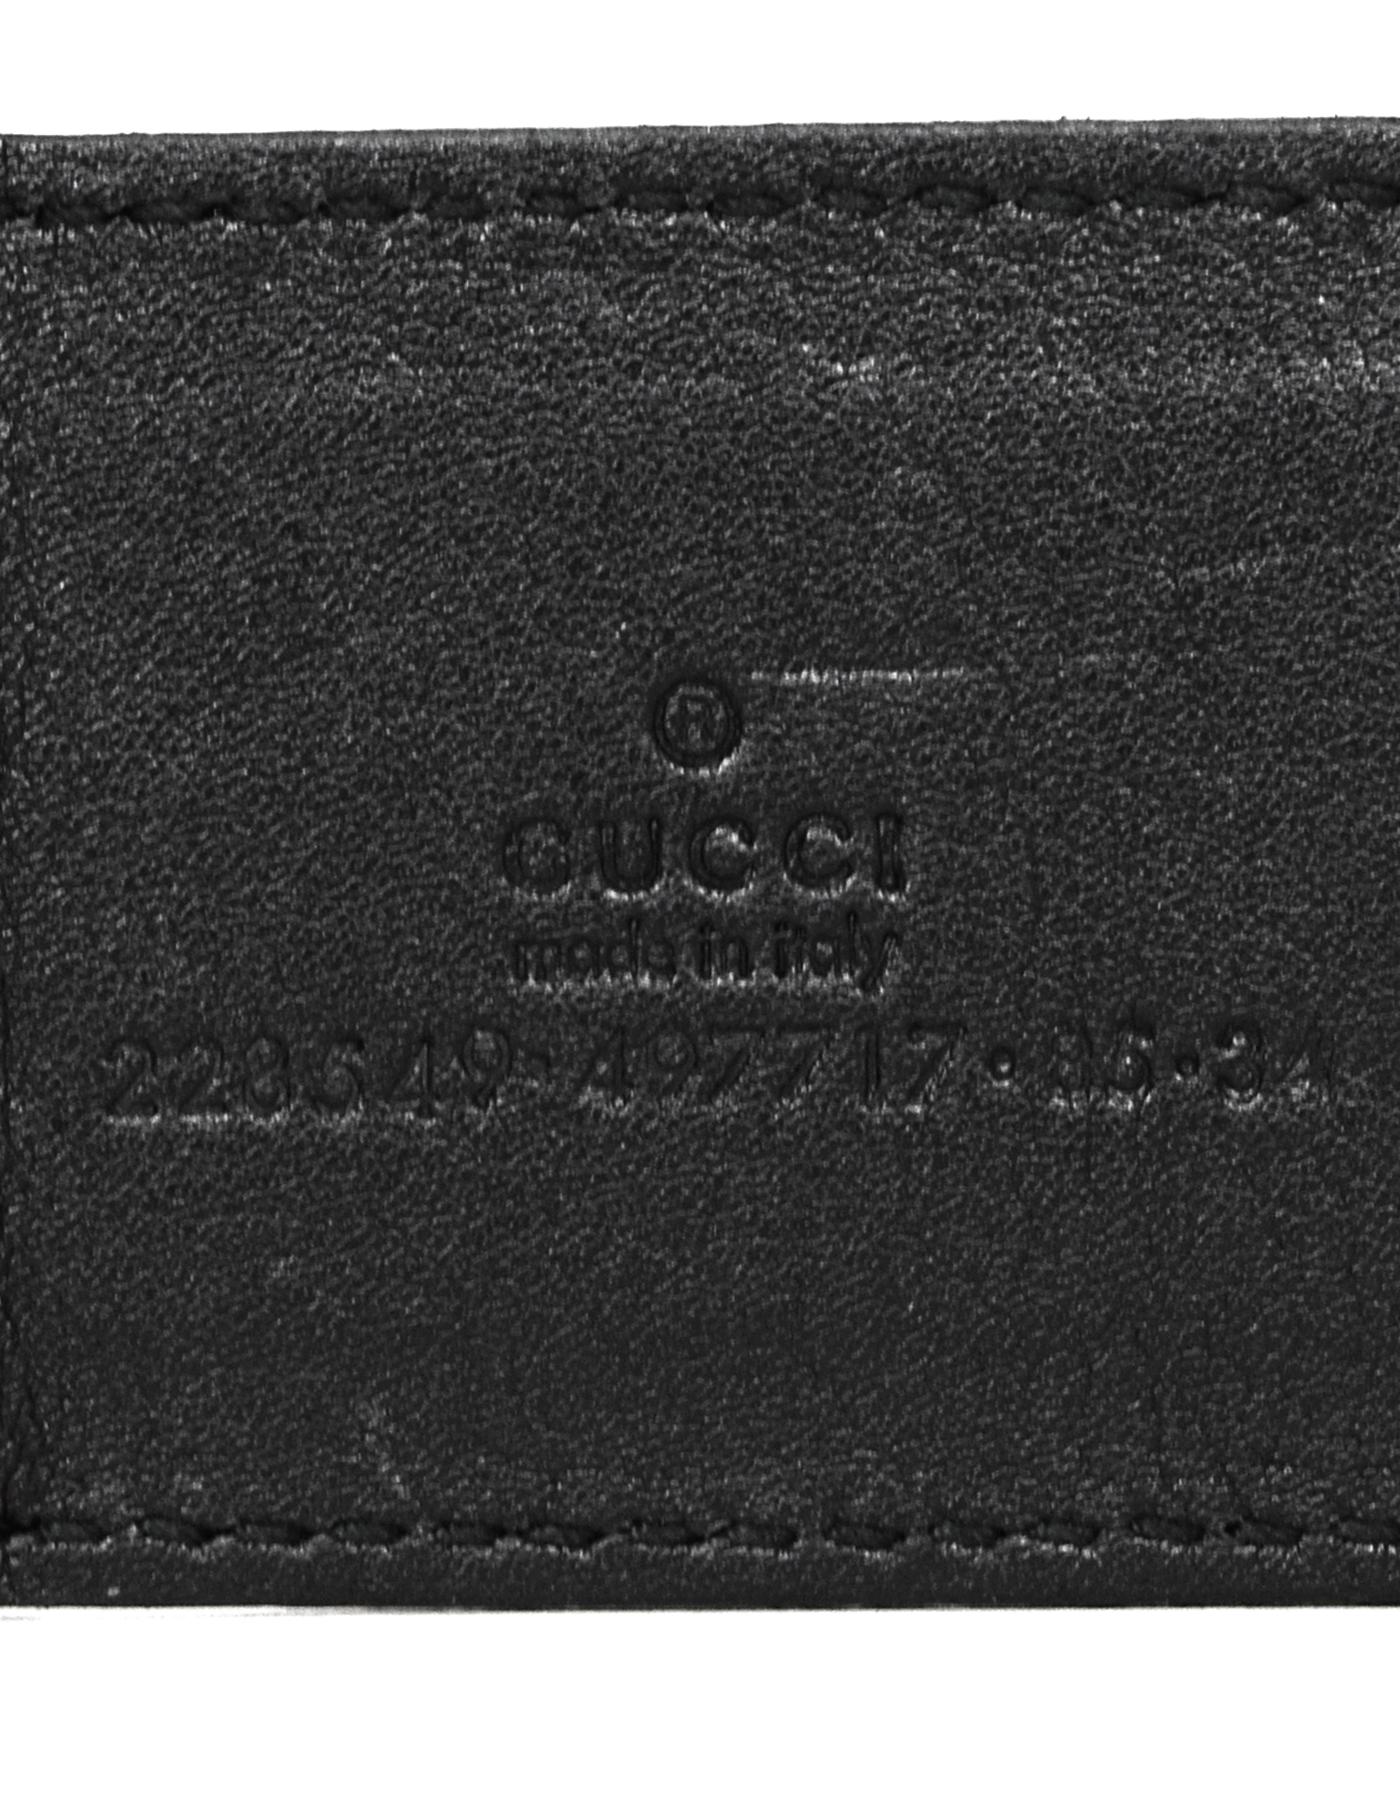 Gucci Black Patent Wrap Belt sz 34 rt $750 3